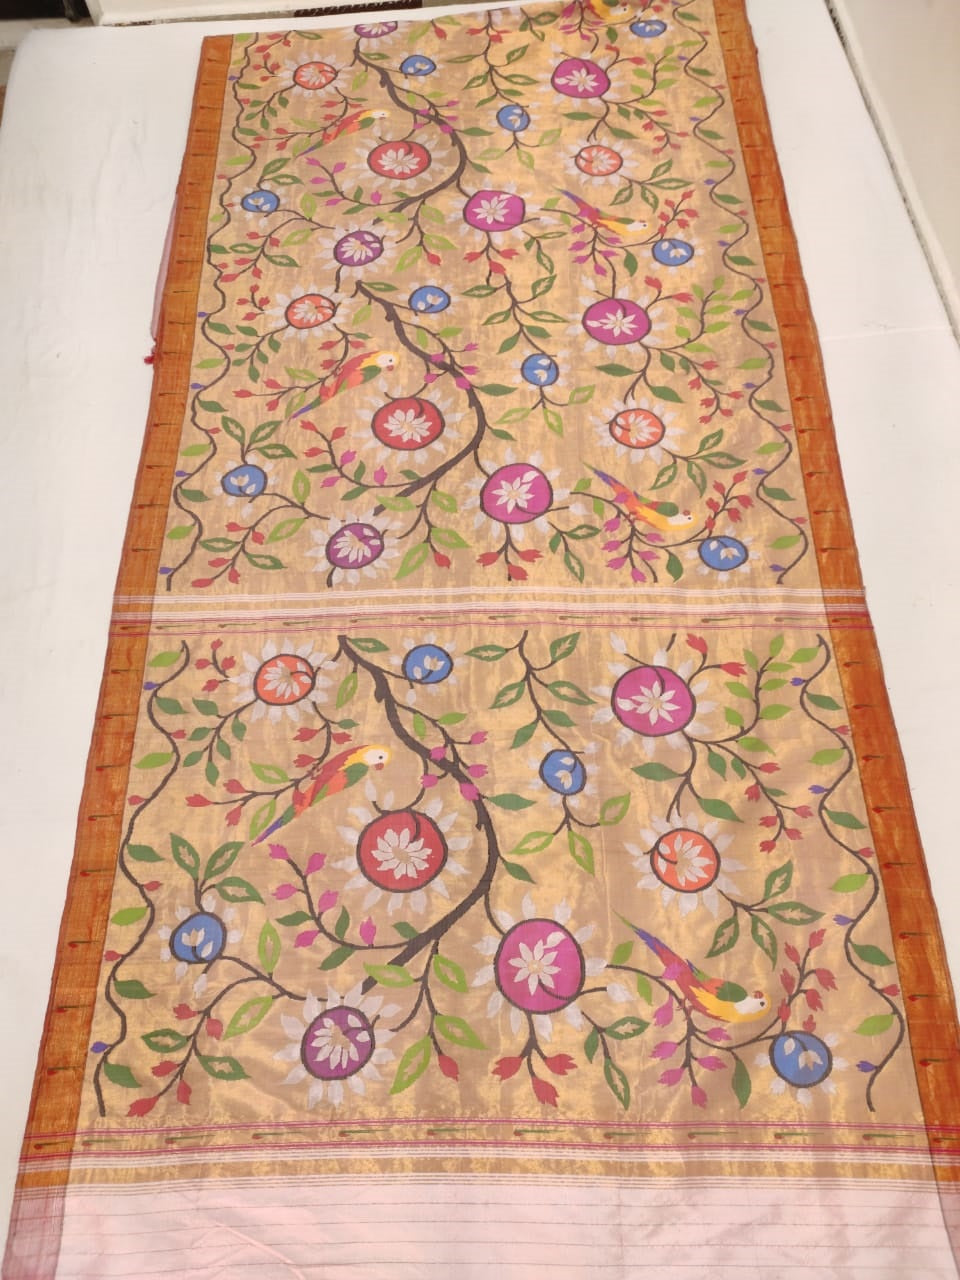 Pure silk handloom all over brocade paithani saree